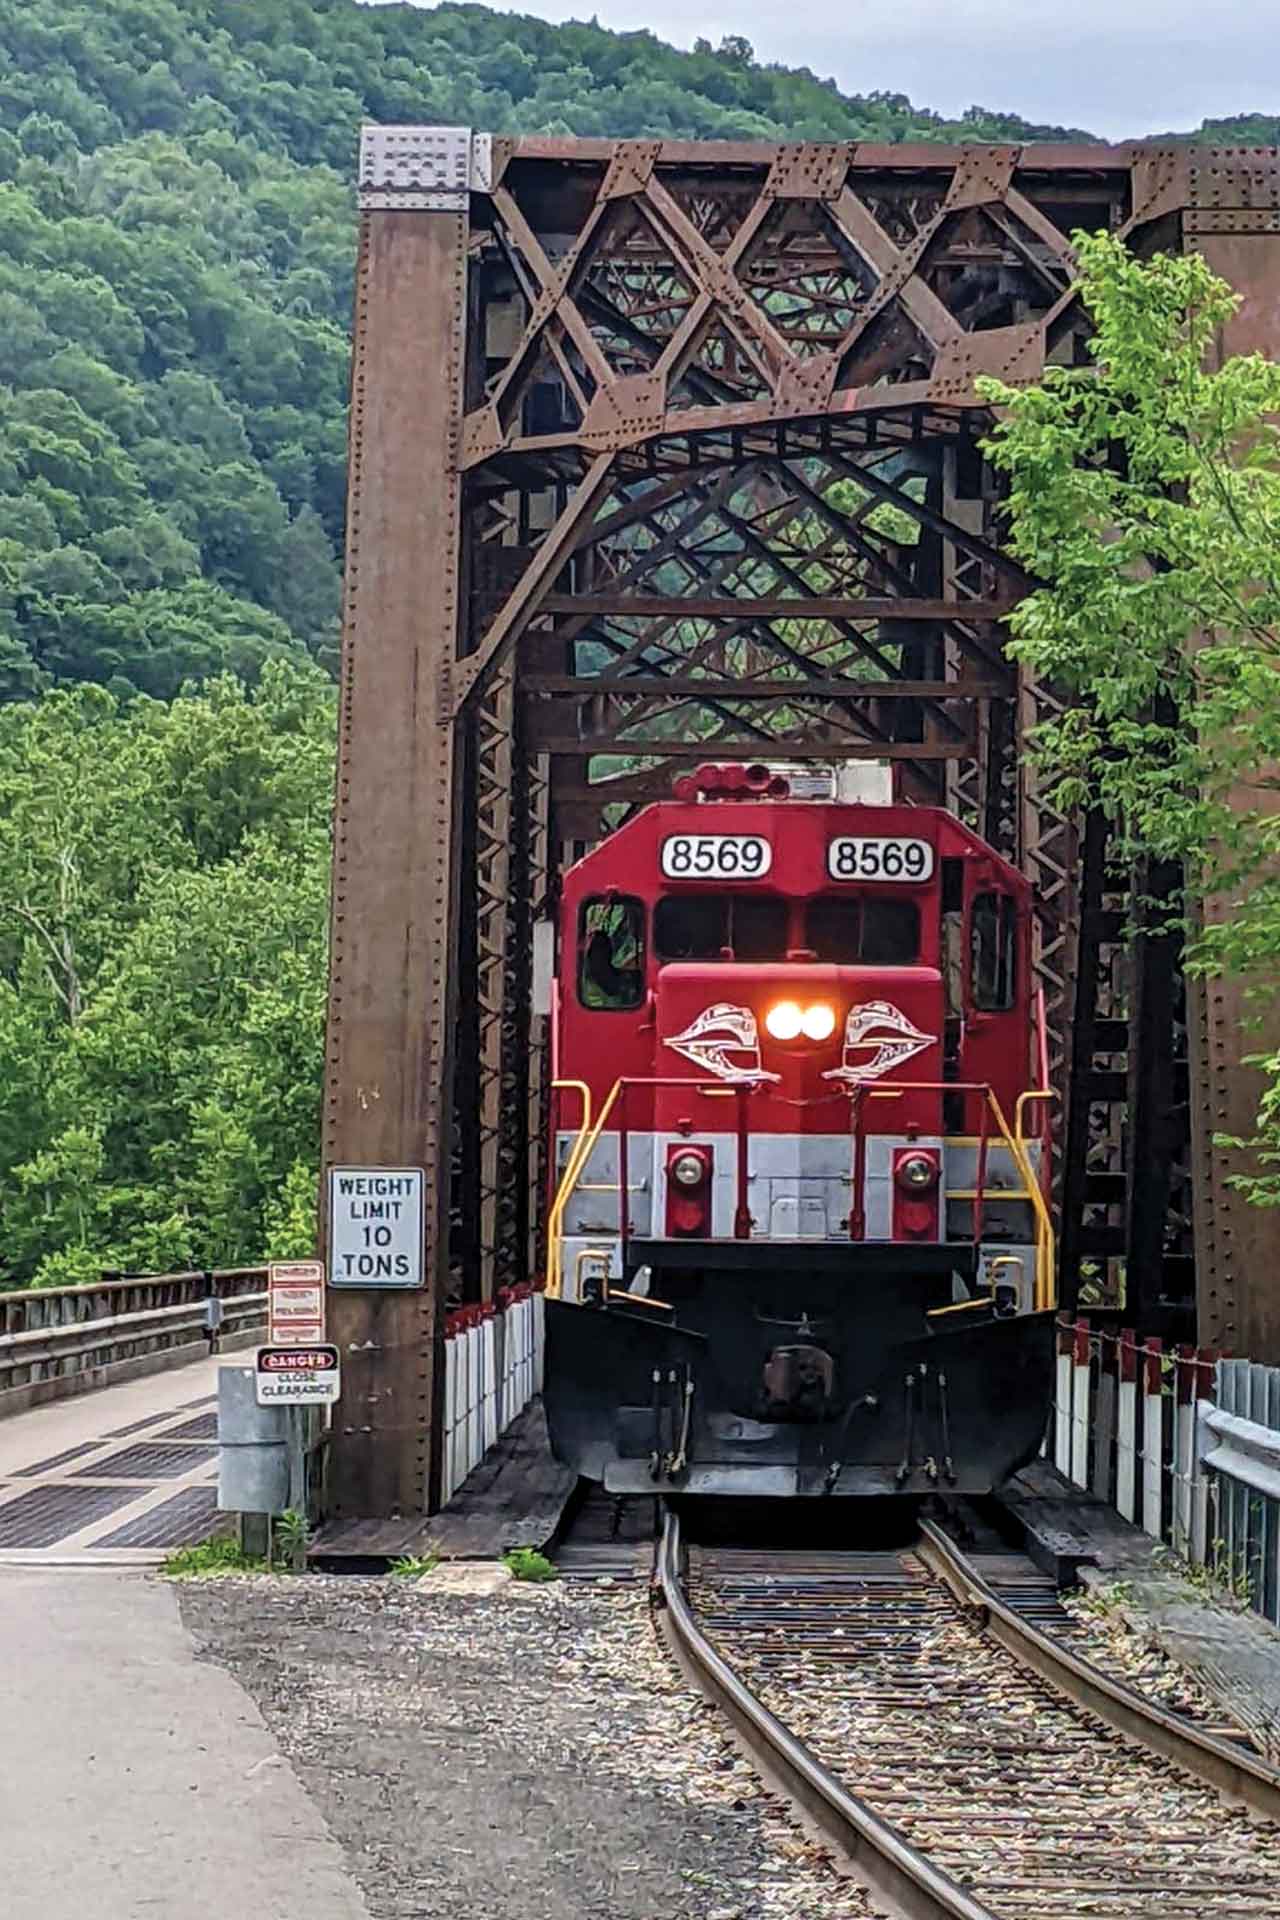 A train emerges from an iron bridge.